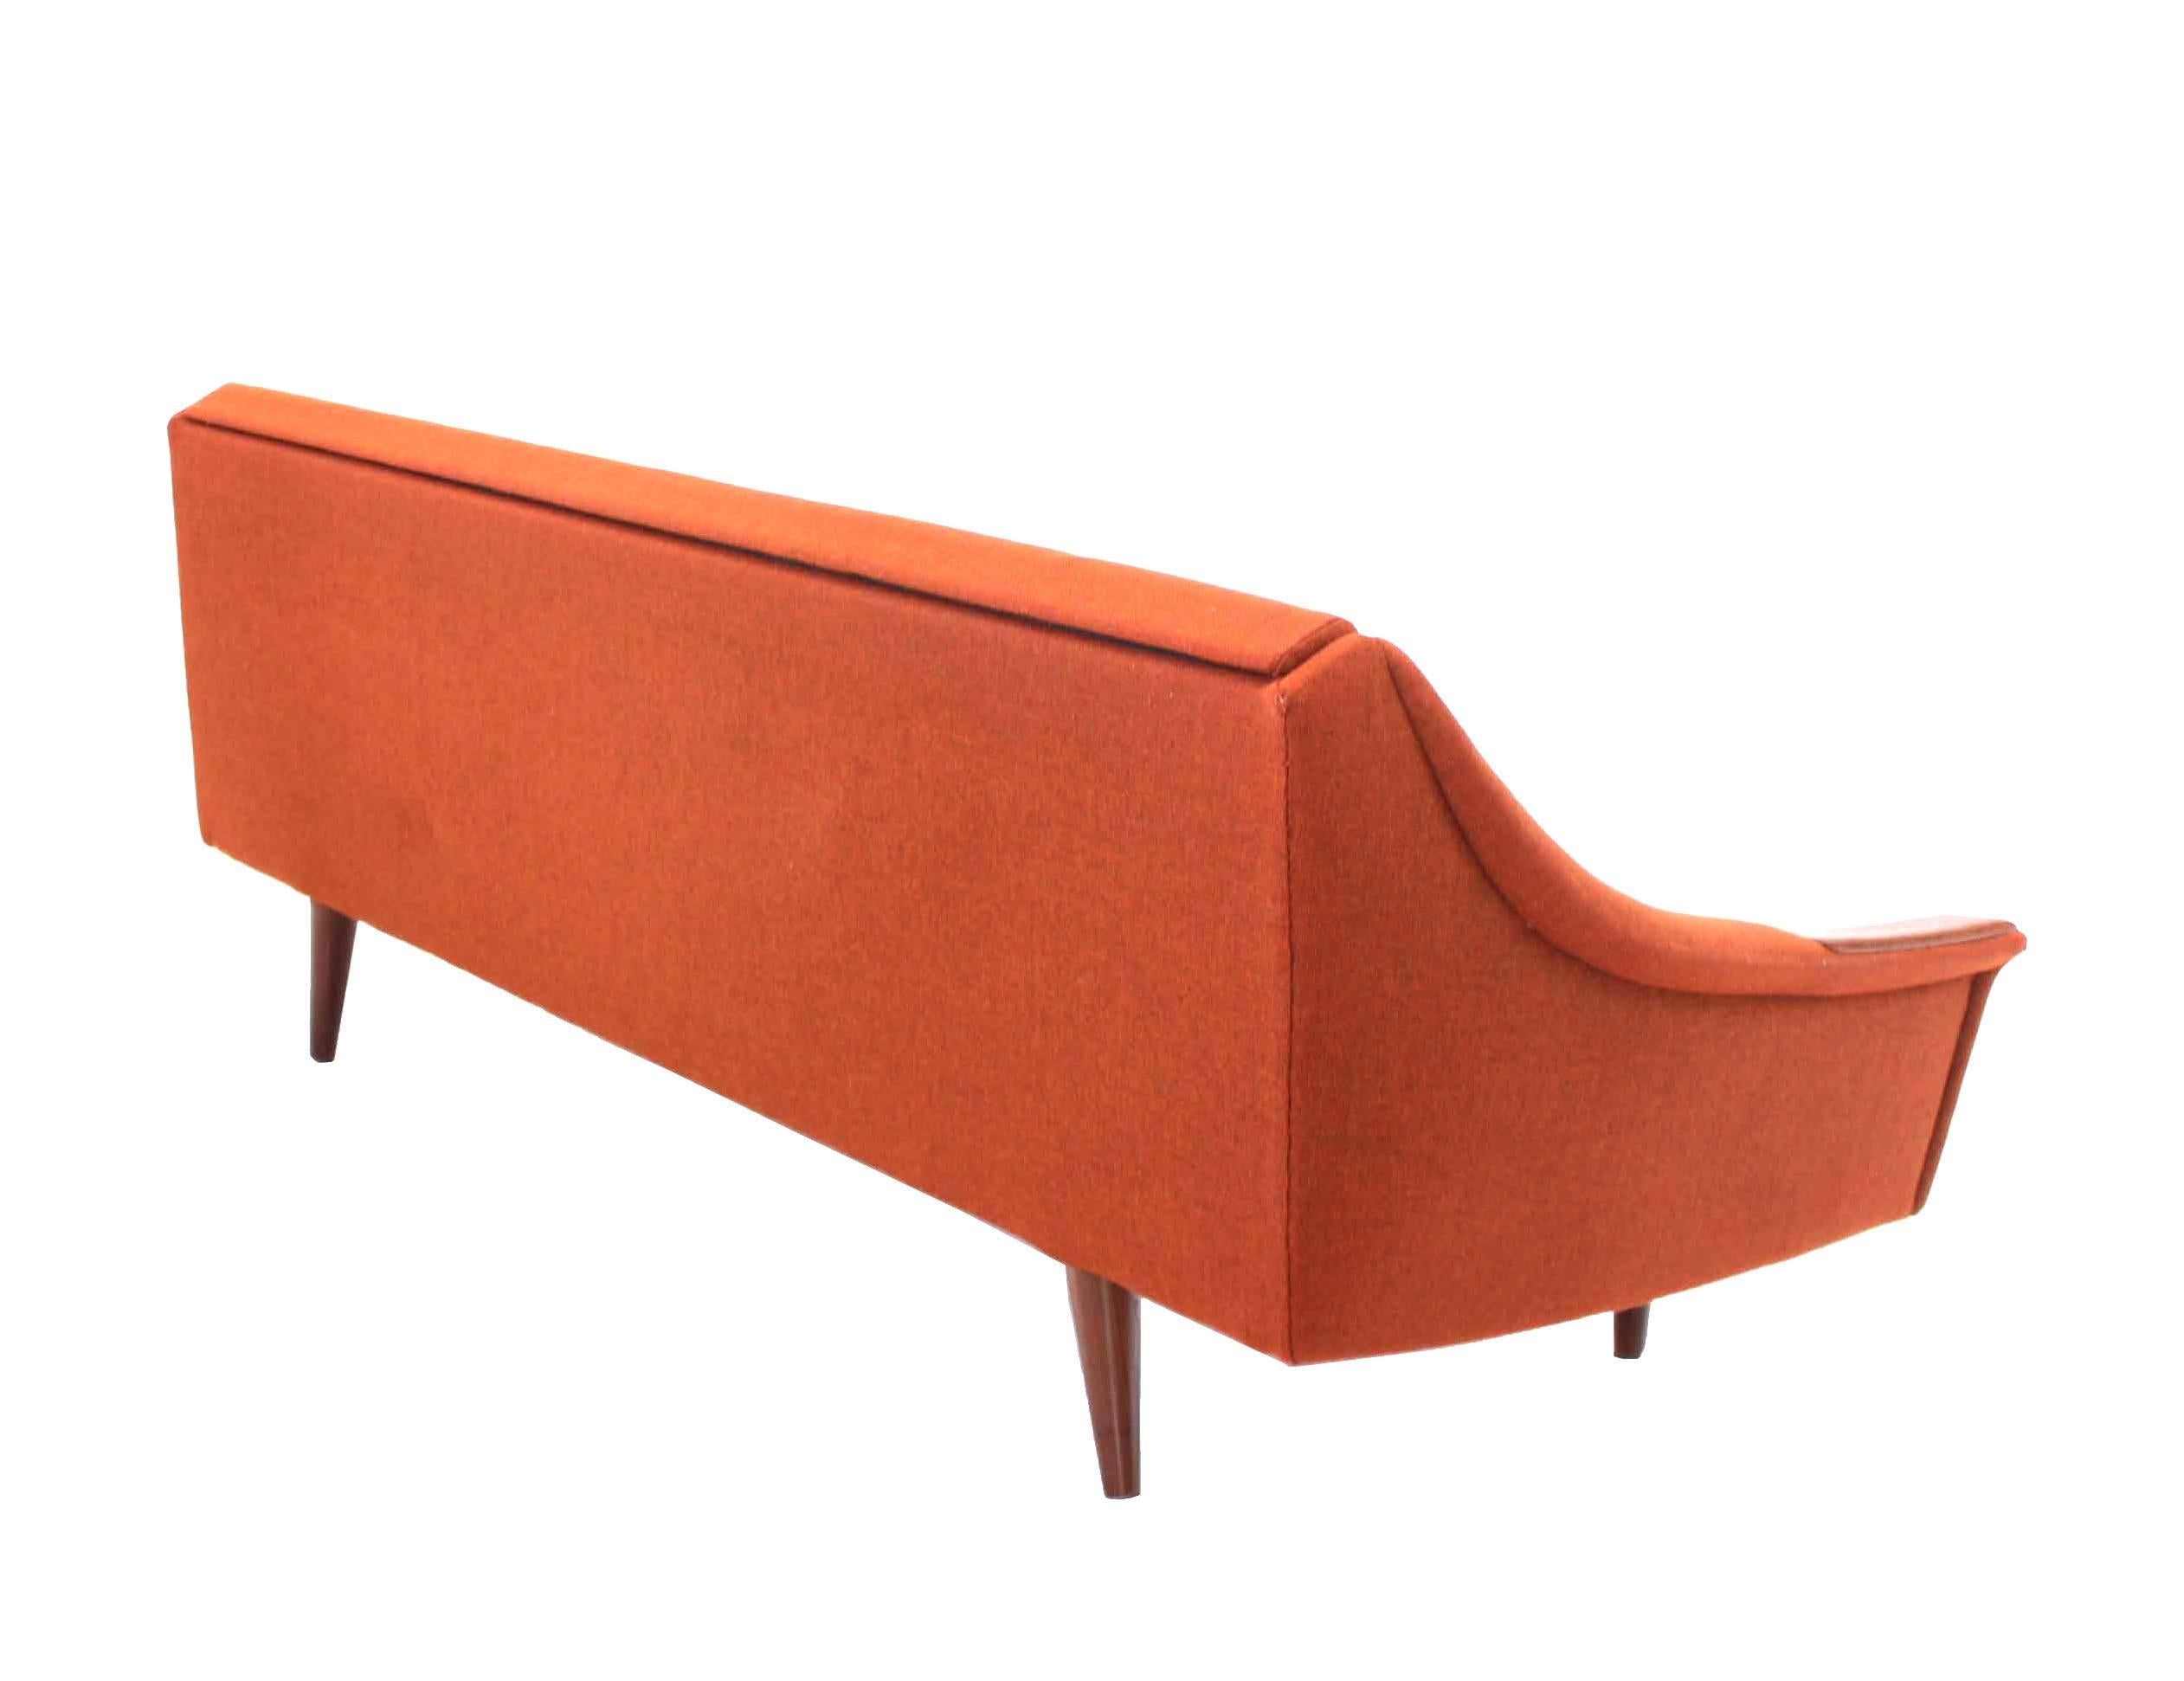 20th Century Rare Danish Modern Convertible Brick Wool Upholstery Daybed Sofa